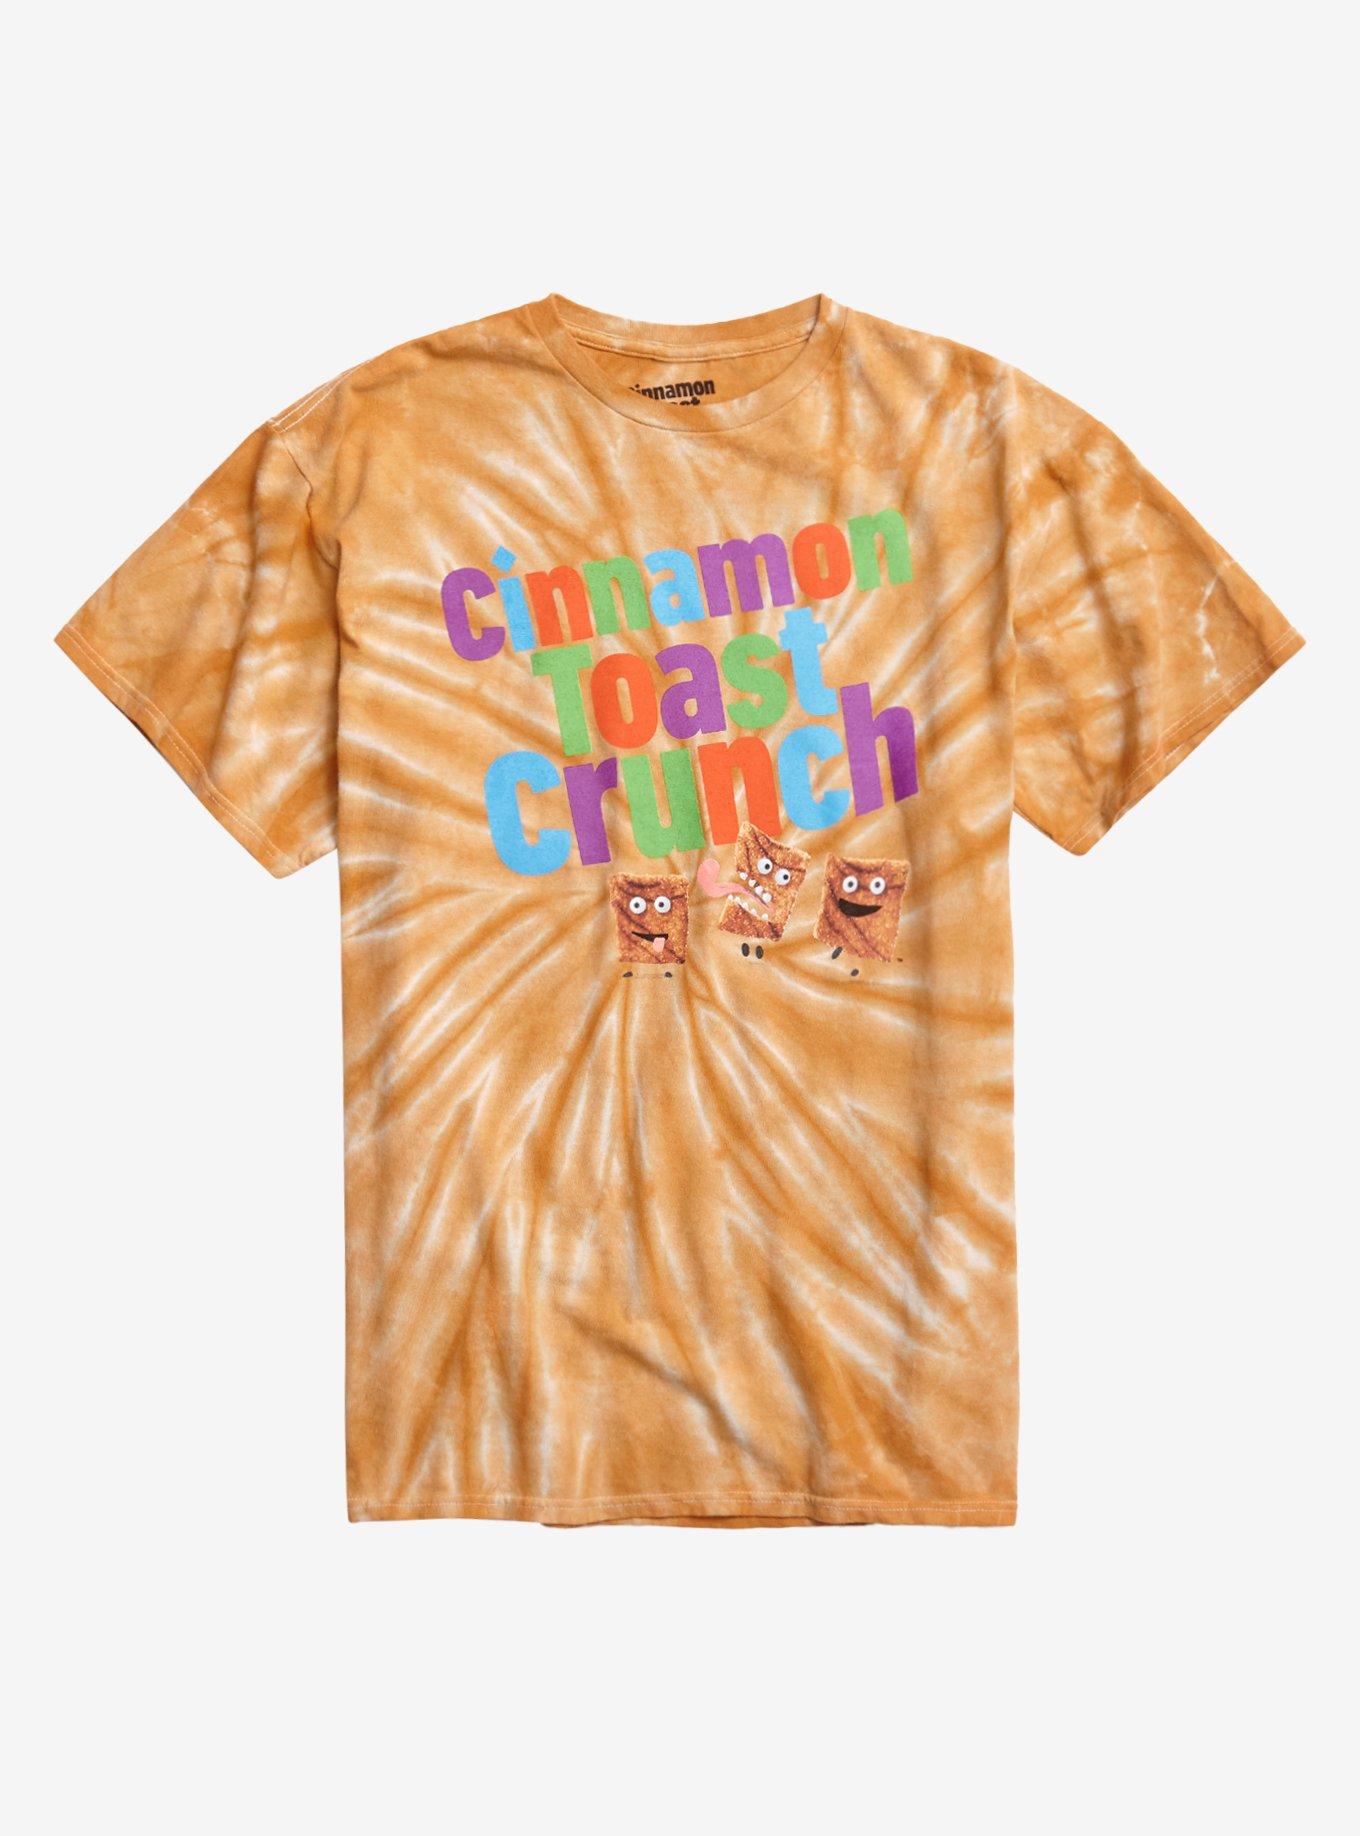 Cinnamon Toast Crunch Logo Tie-Dye T-Shirt | Hot Topic